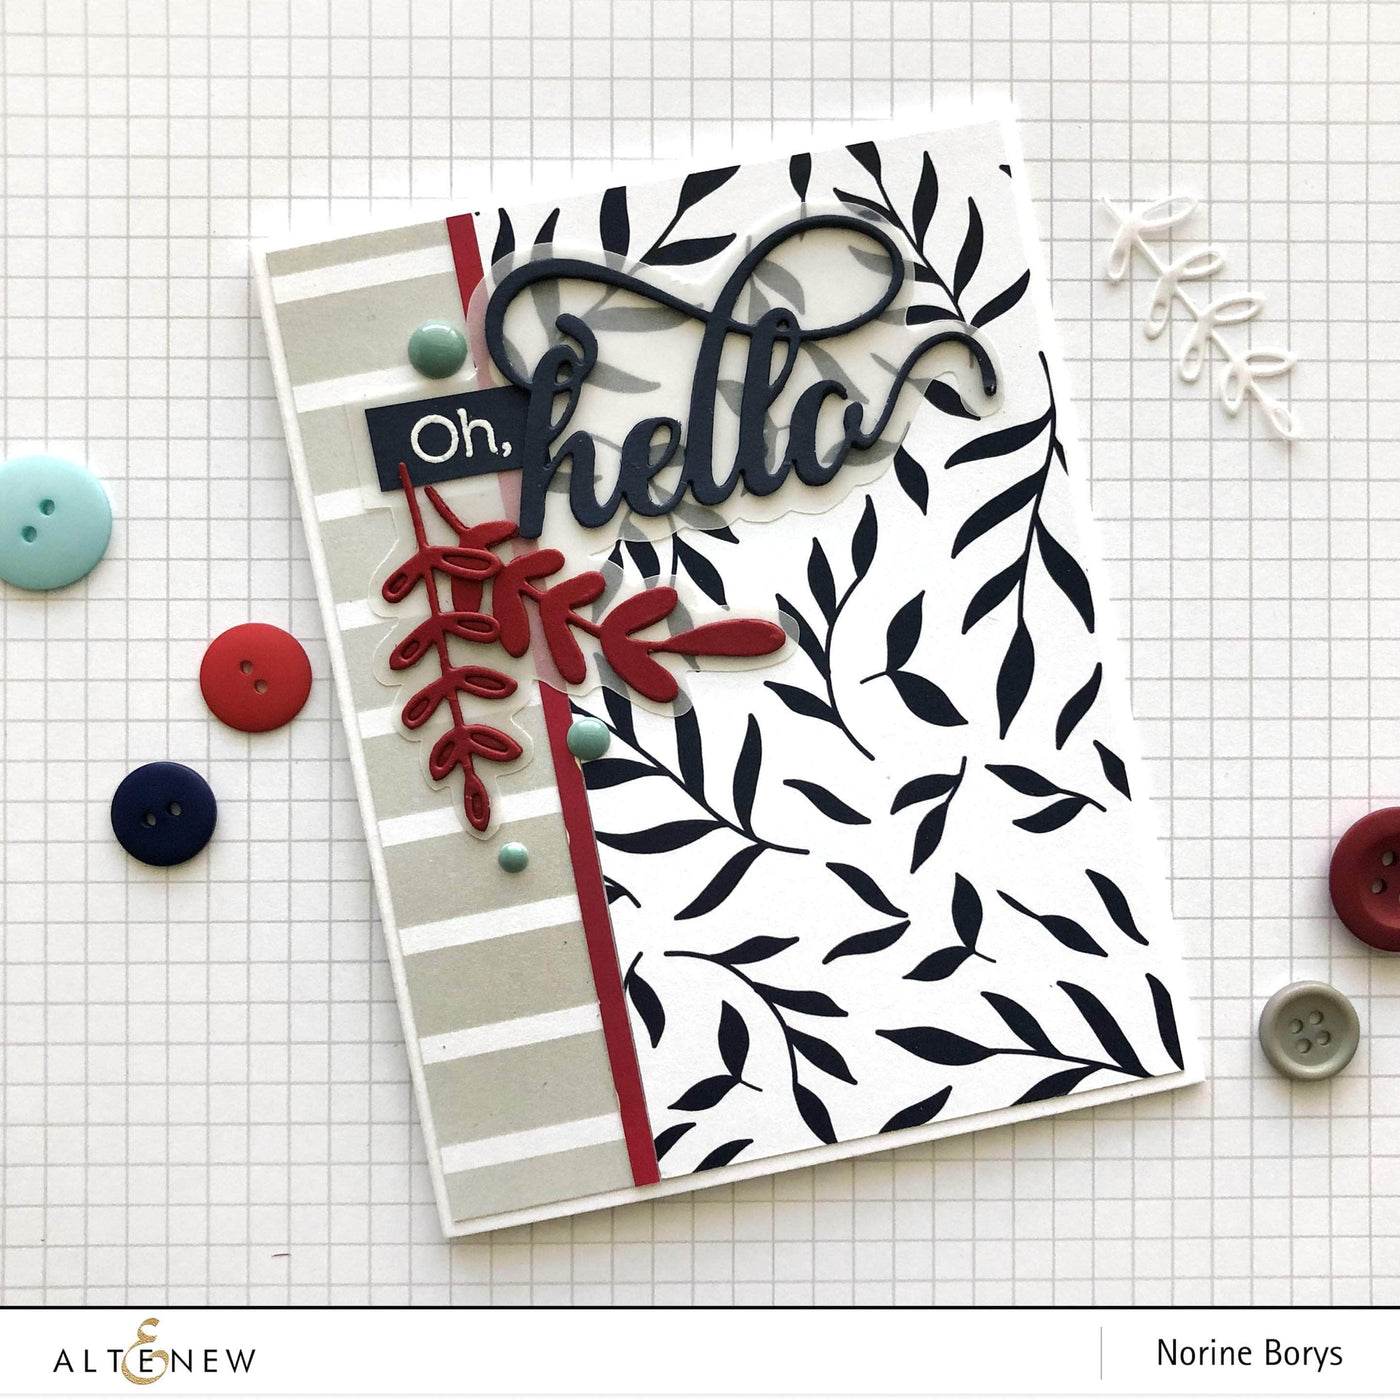 Altenew Creativity Kit Bundle Simply Sweet Stained Glass Creativity Cardmaking Kit